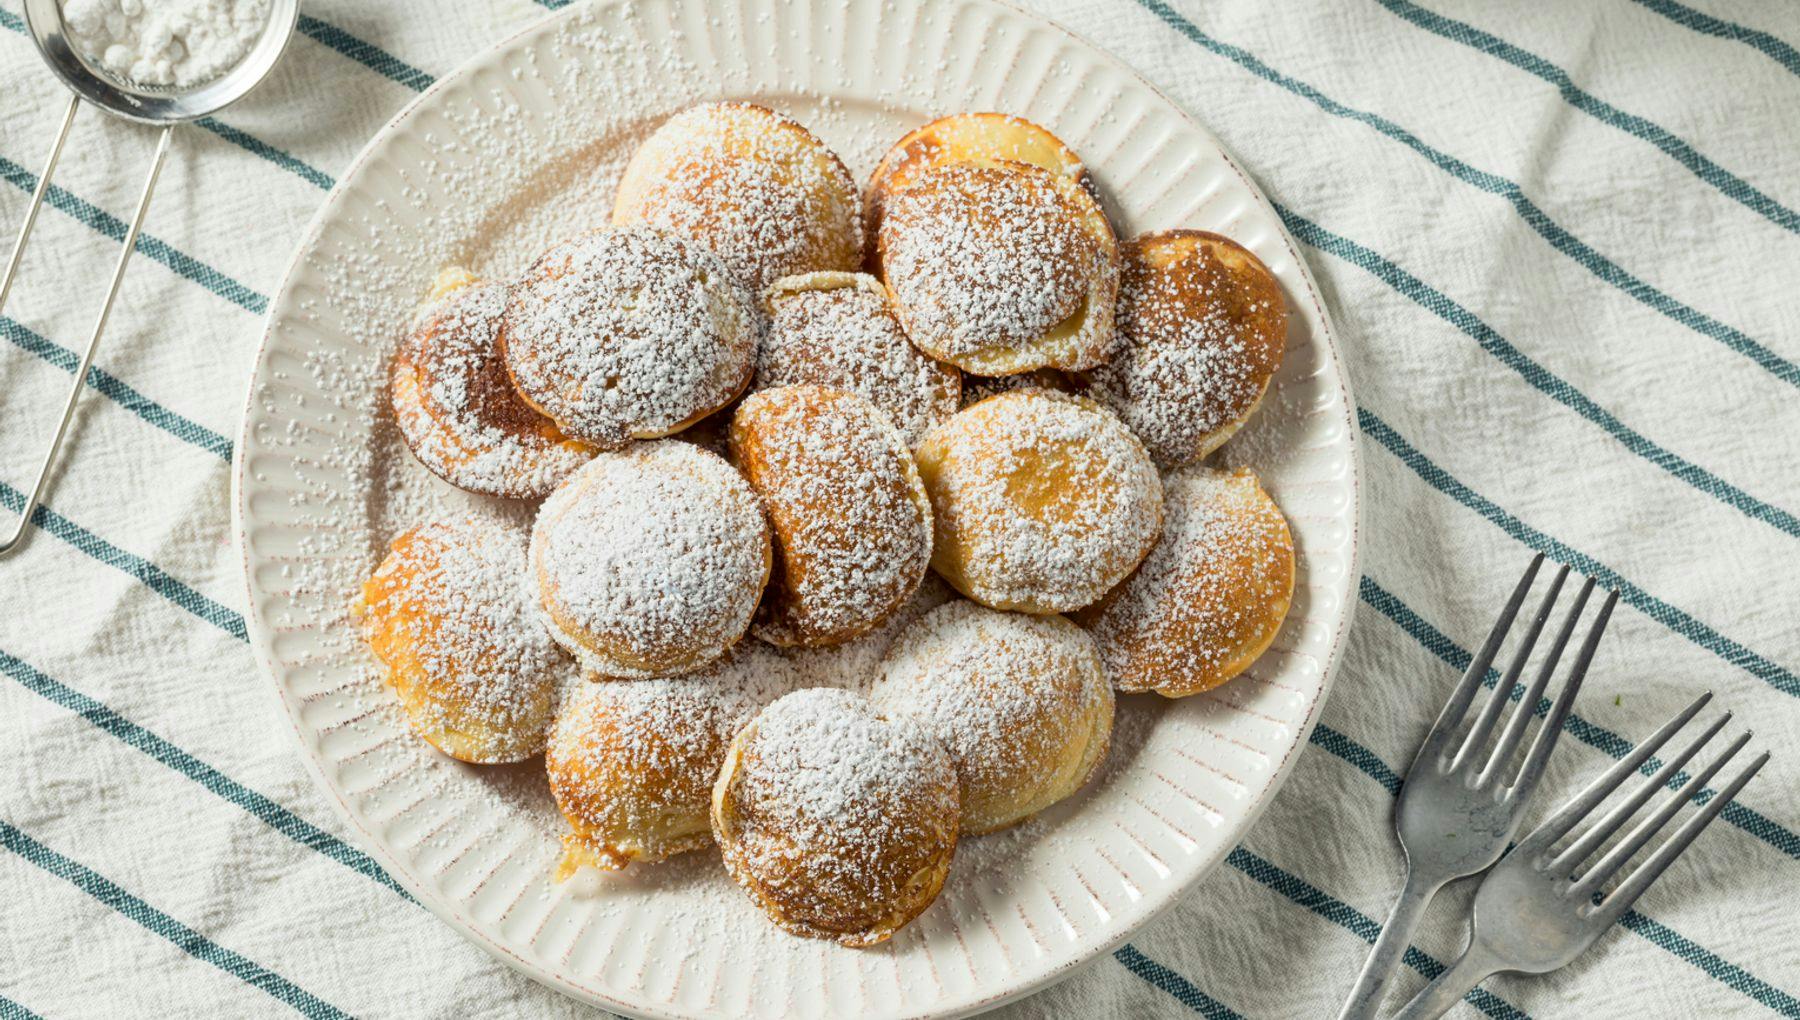 Homemade Dutch Poffertjes Pancakes with Powdered Sugar
1217659759
Typically Dutch foods